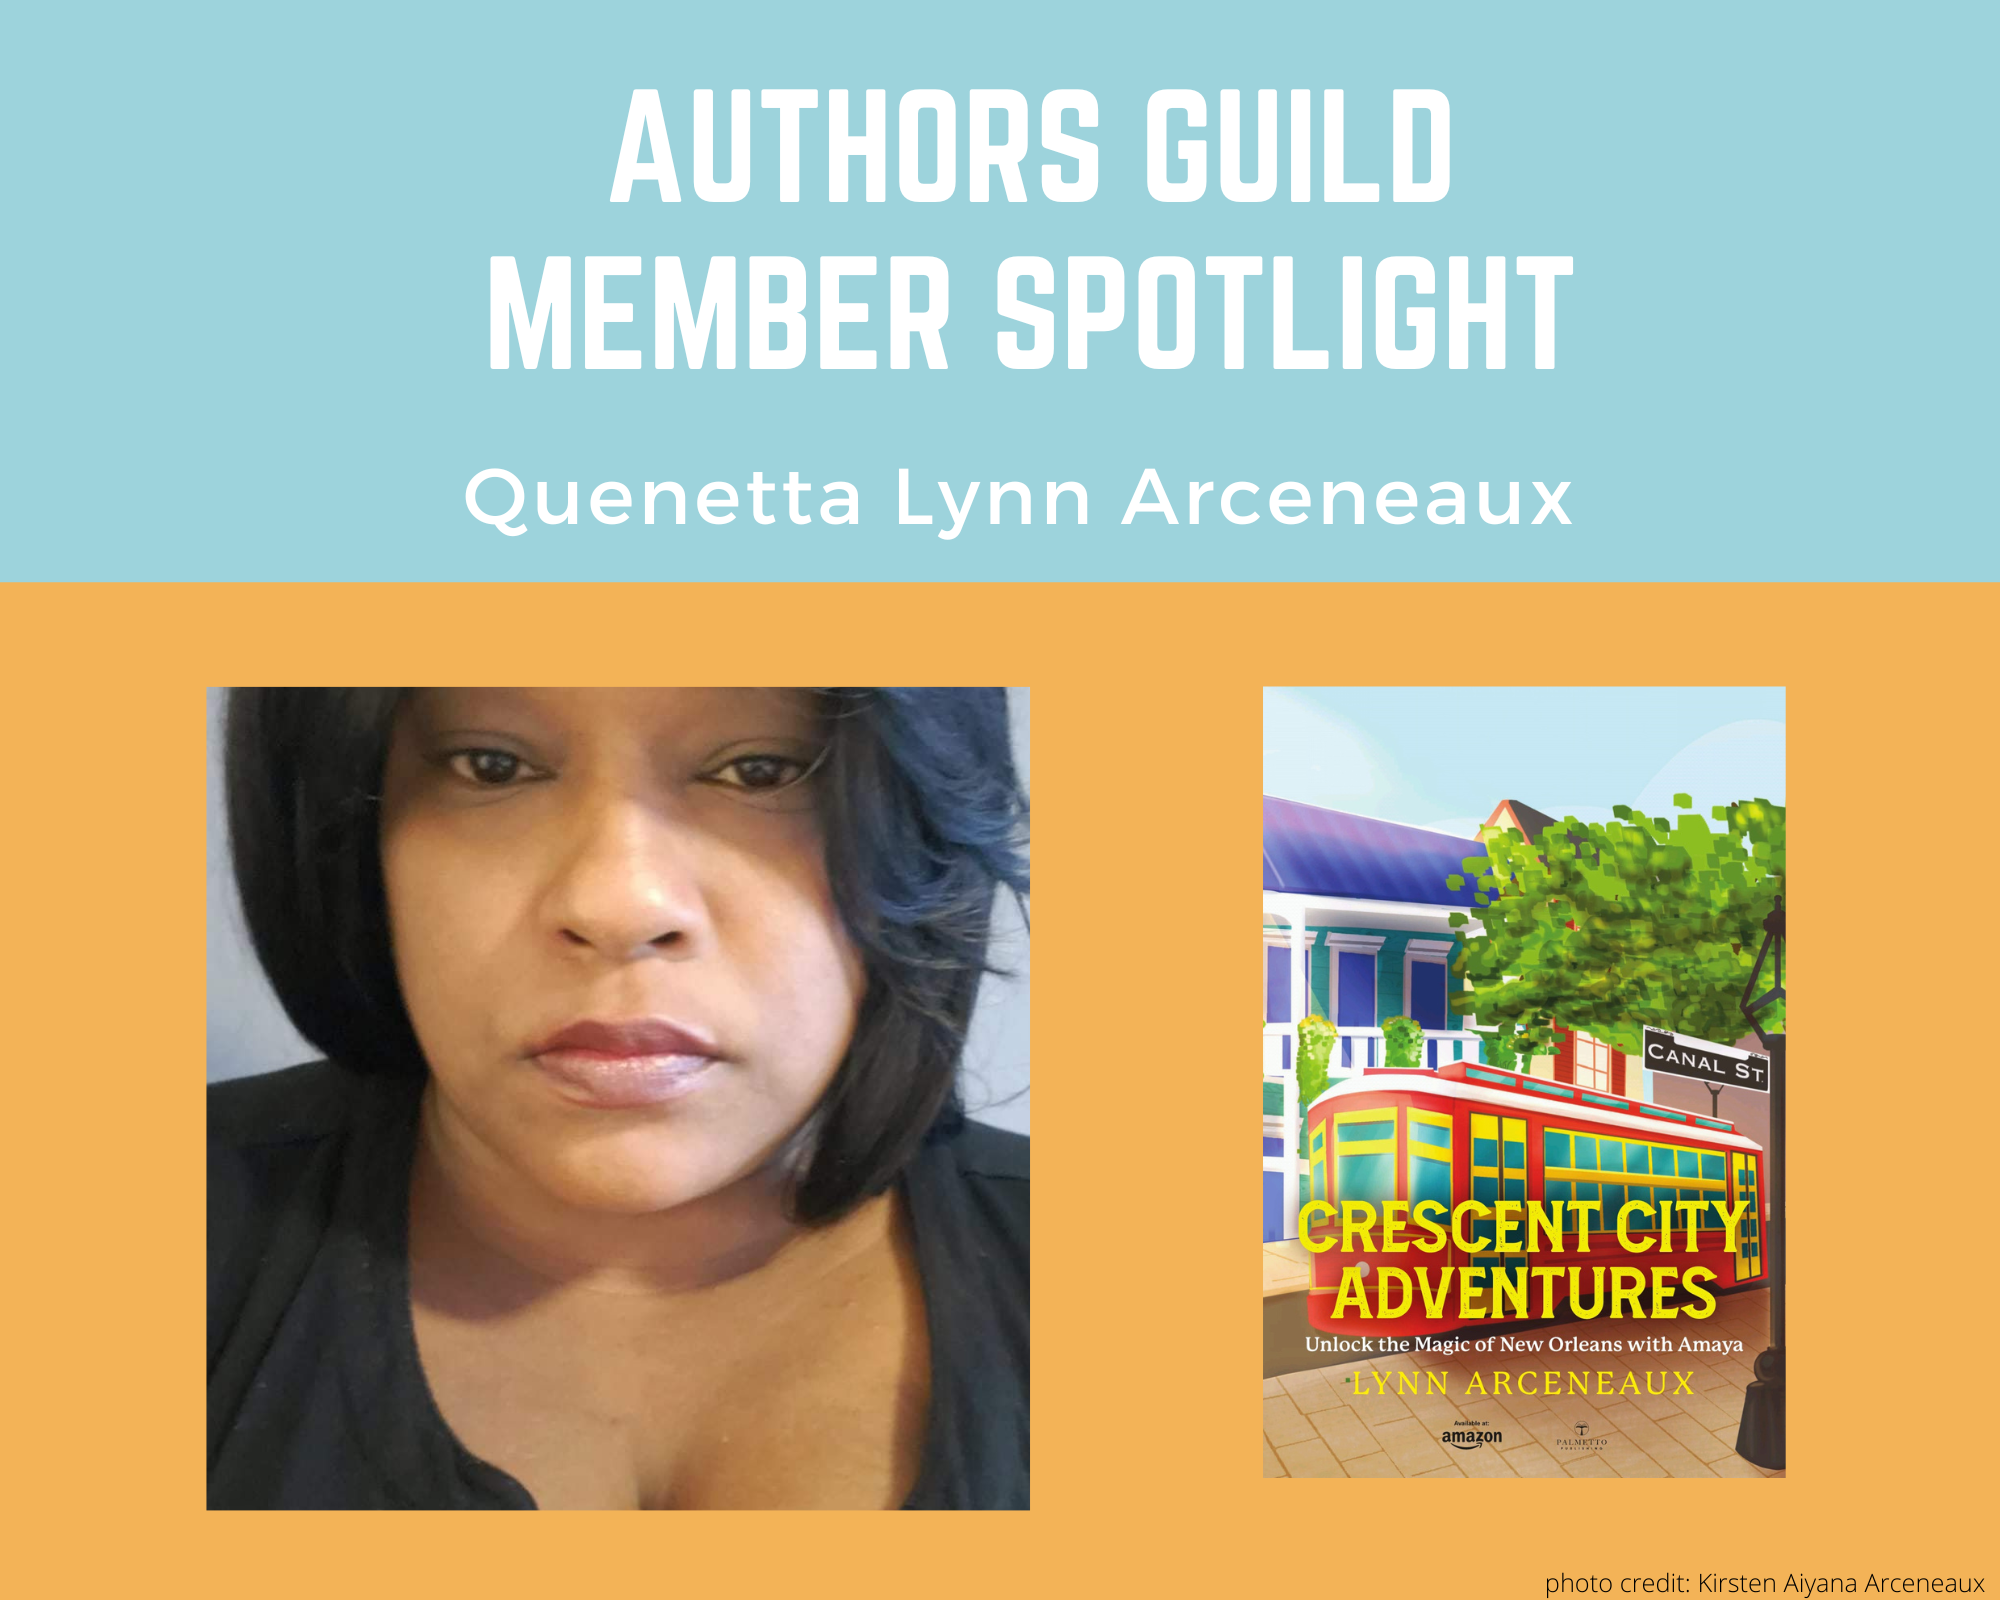 author Quenetta Lynn Arceneaux and her book Crescent City Adventures